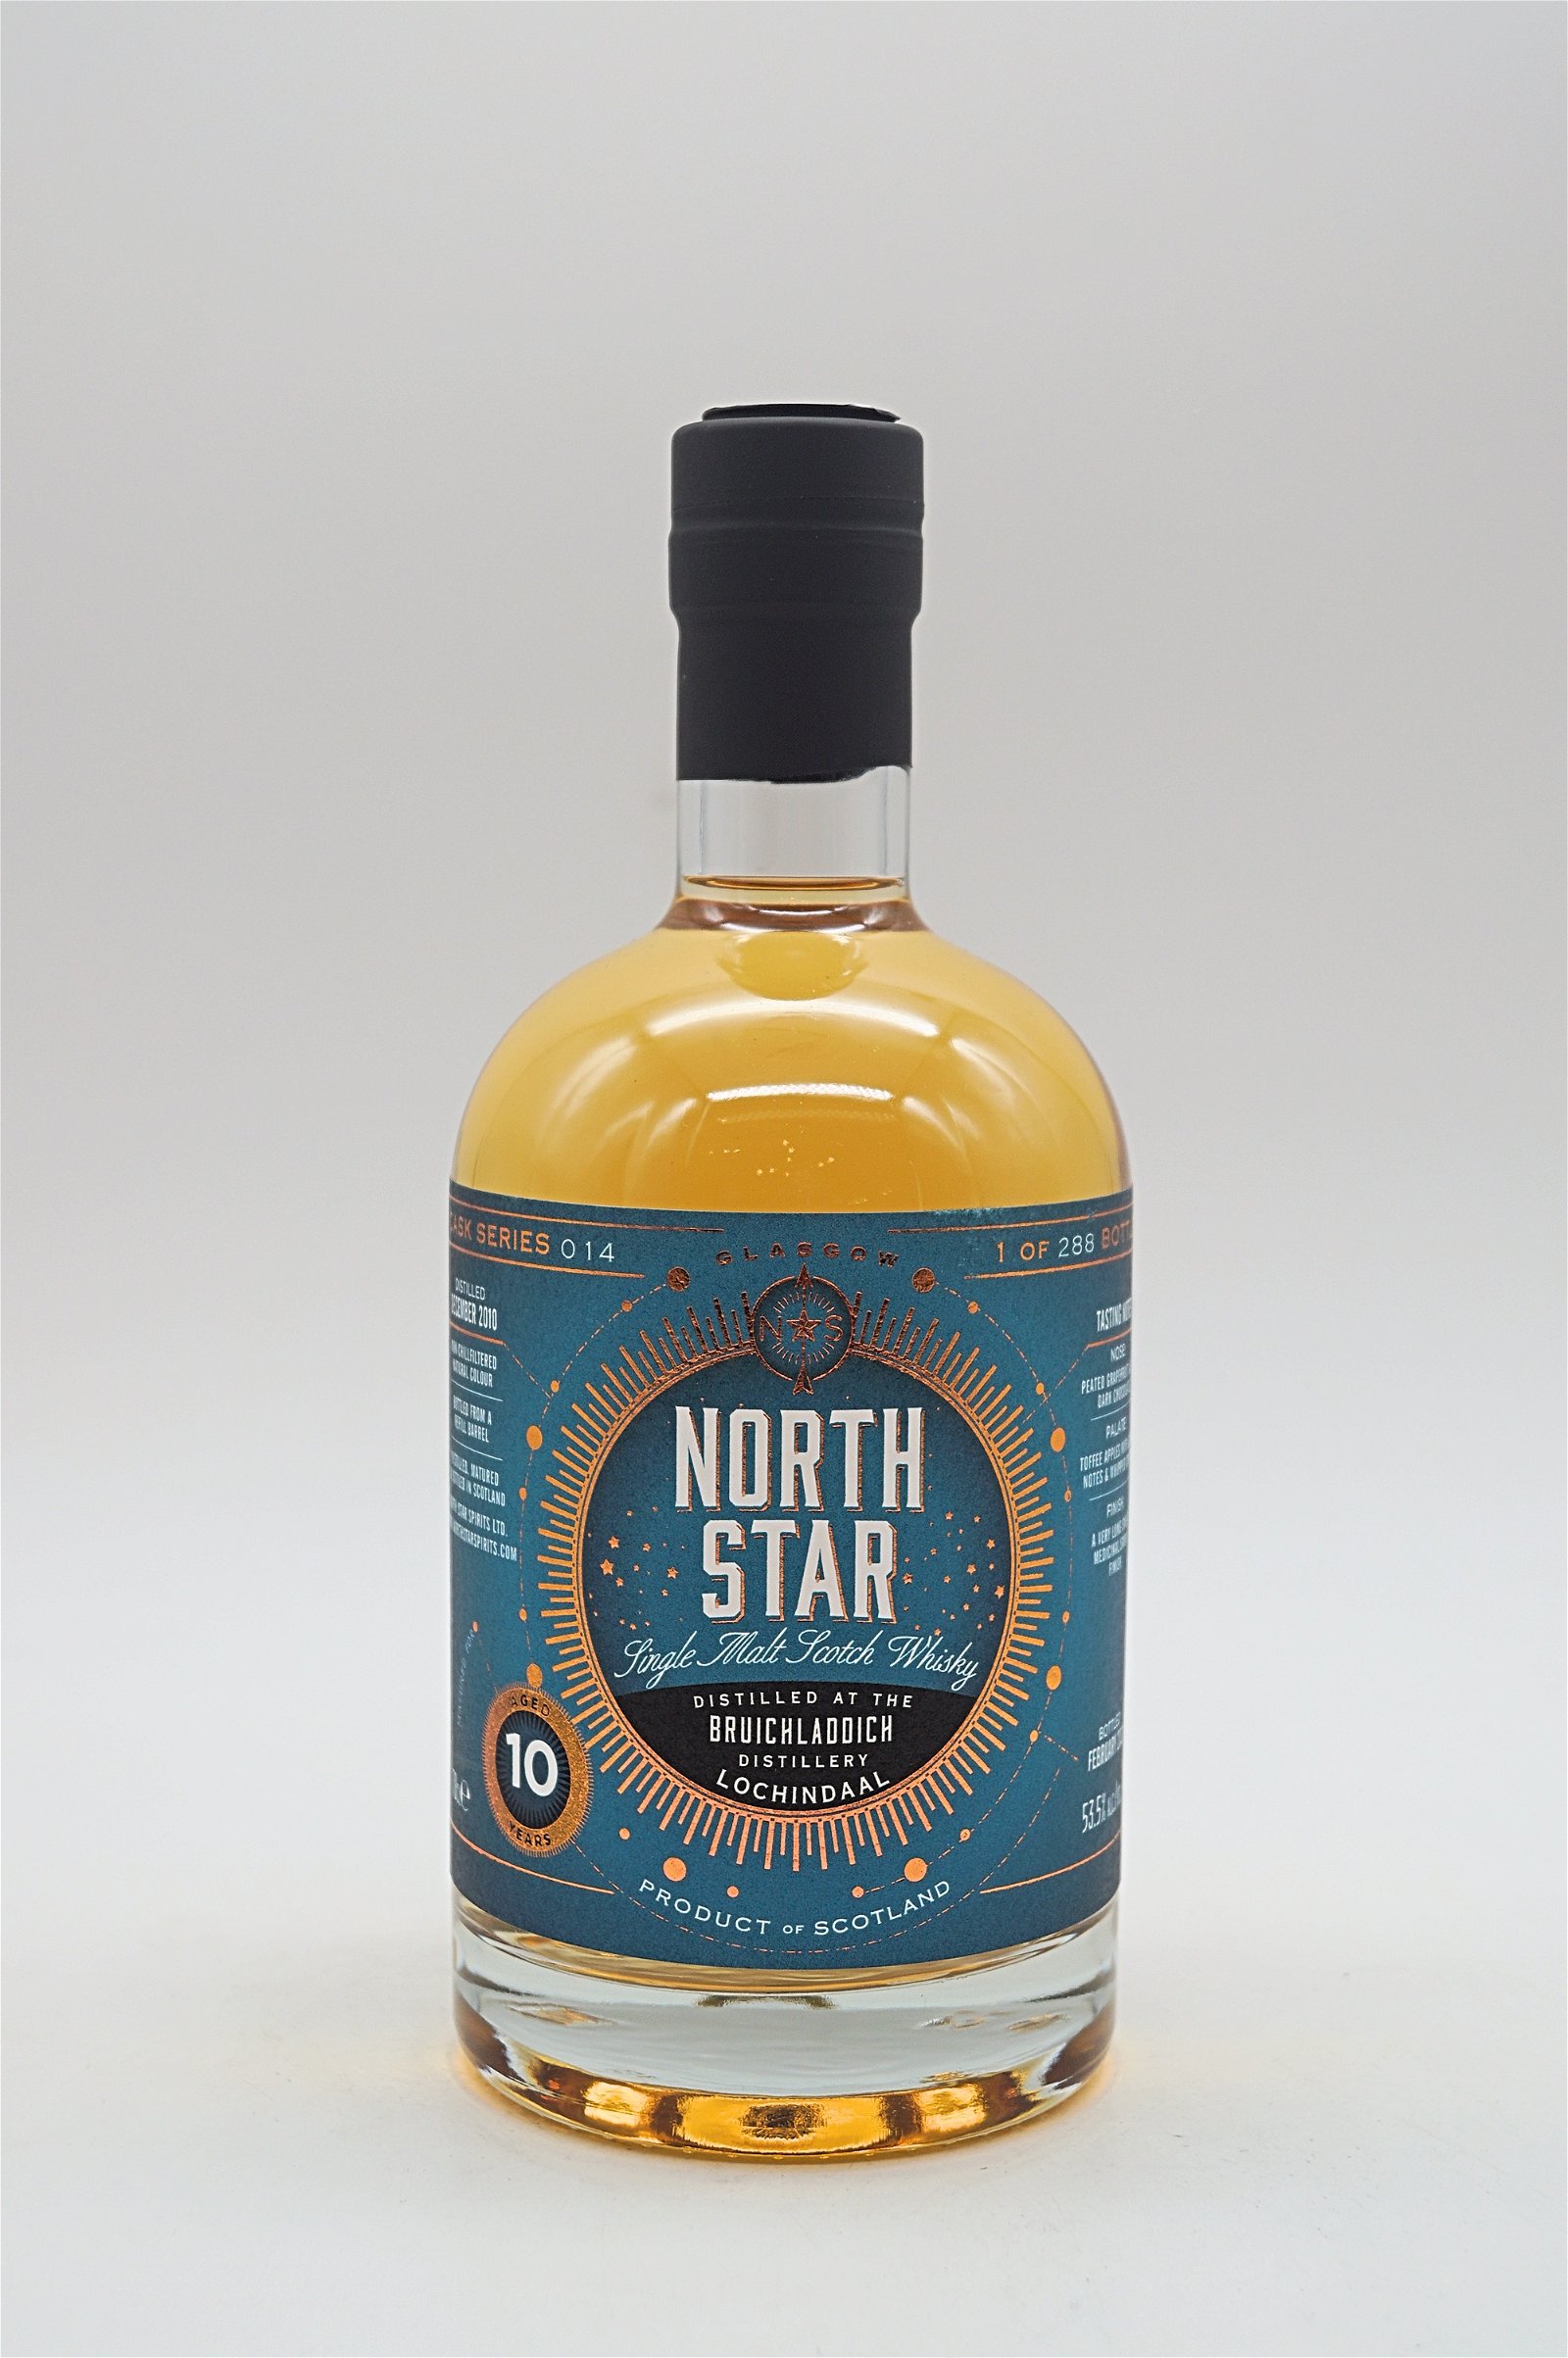 North Star Lochindaal 10 Jahre CS 14 Single Malt Scotch Whisky